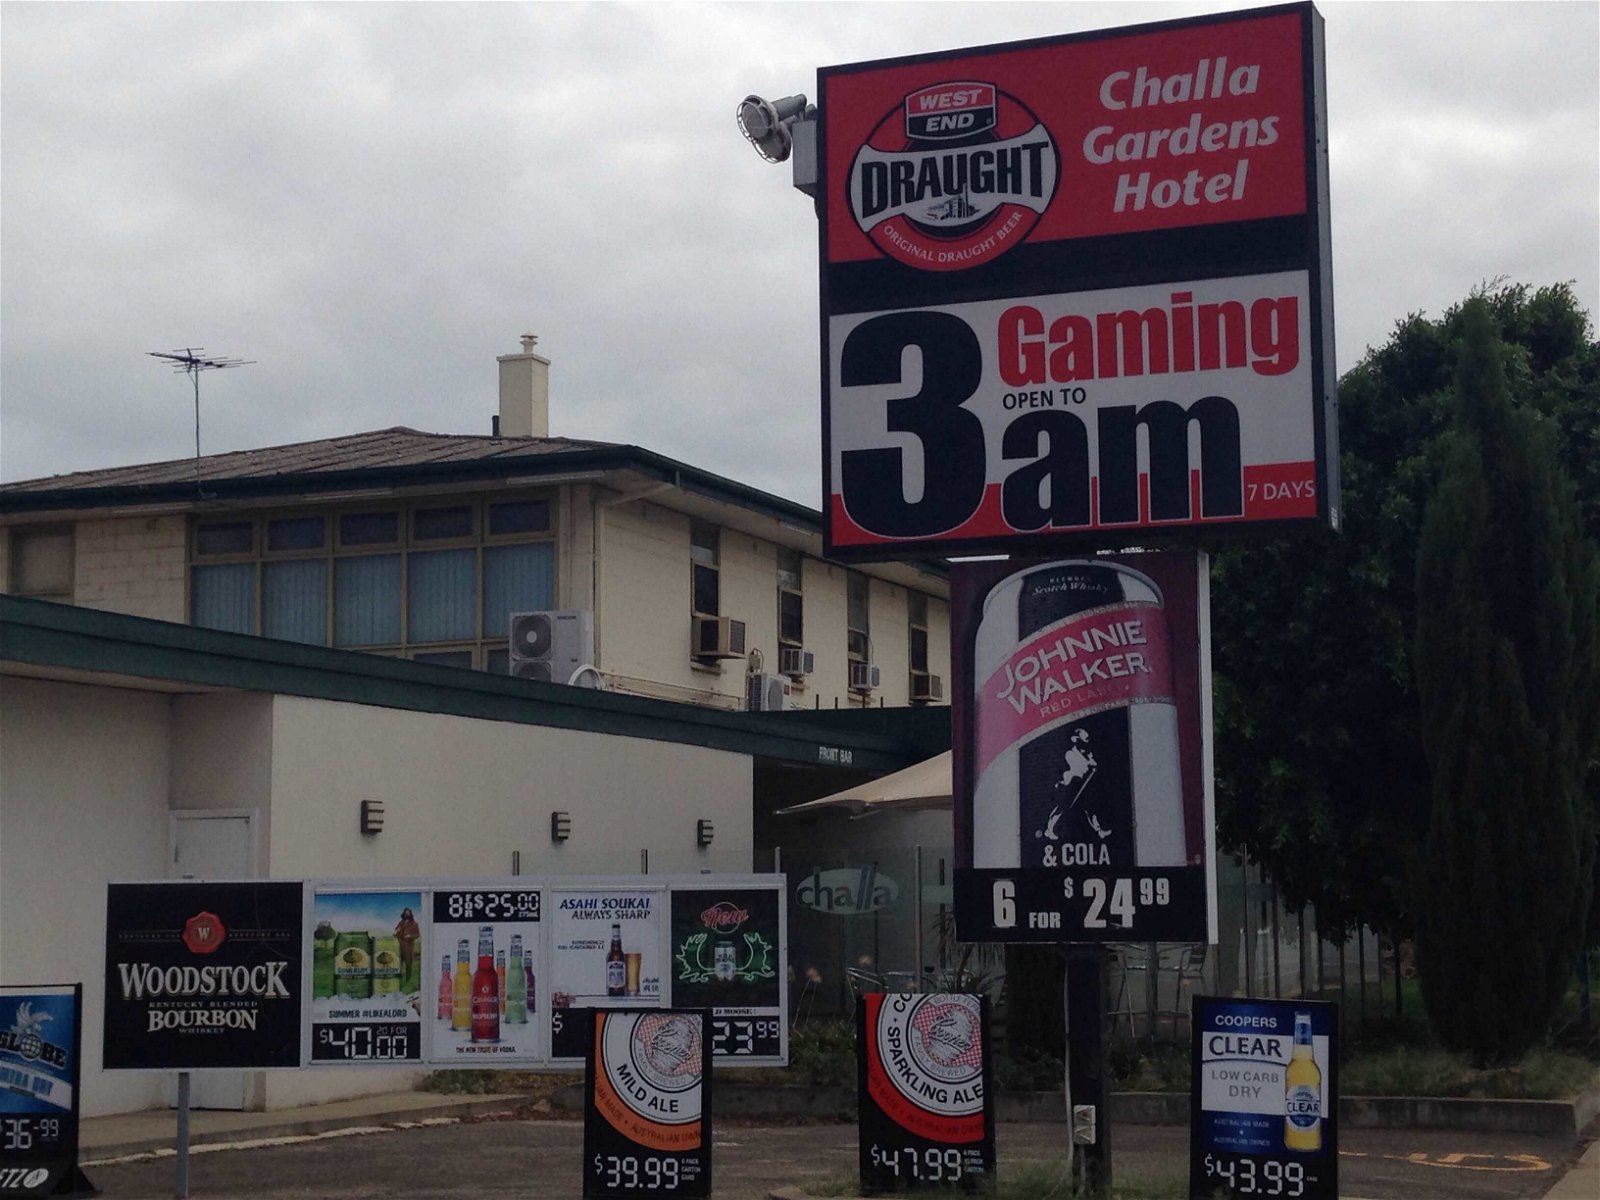 Challa Gardens Hotel - Port Augusta Accommodation